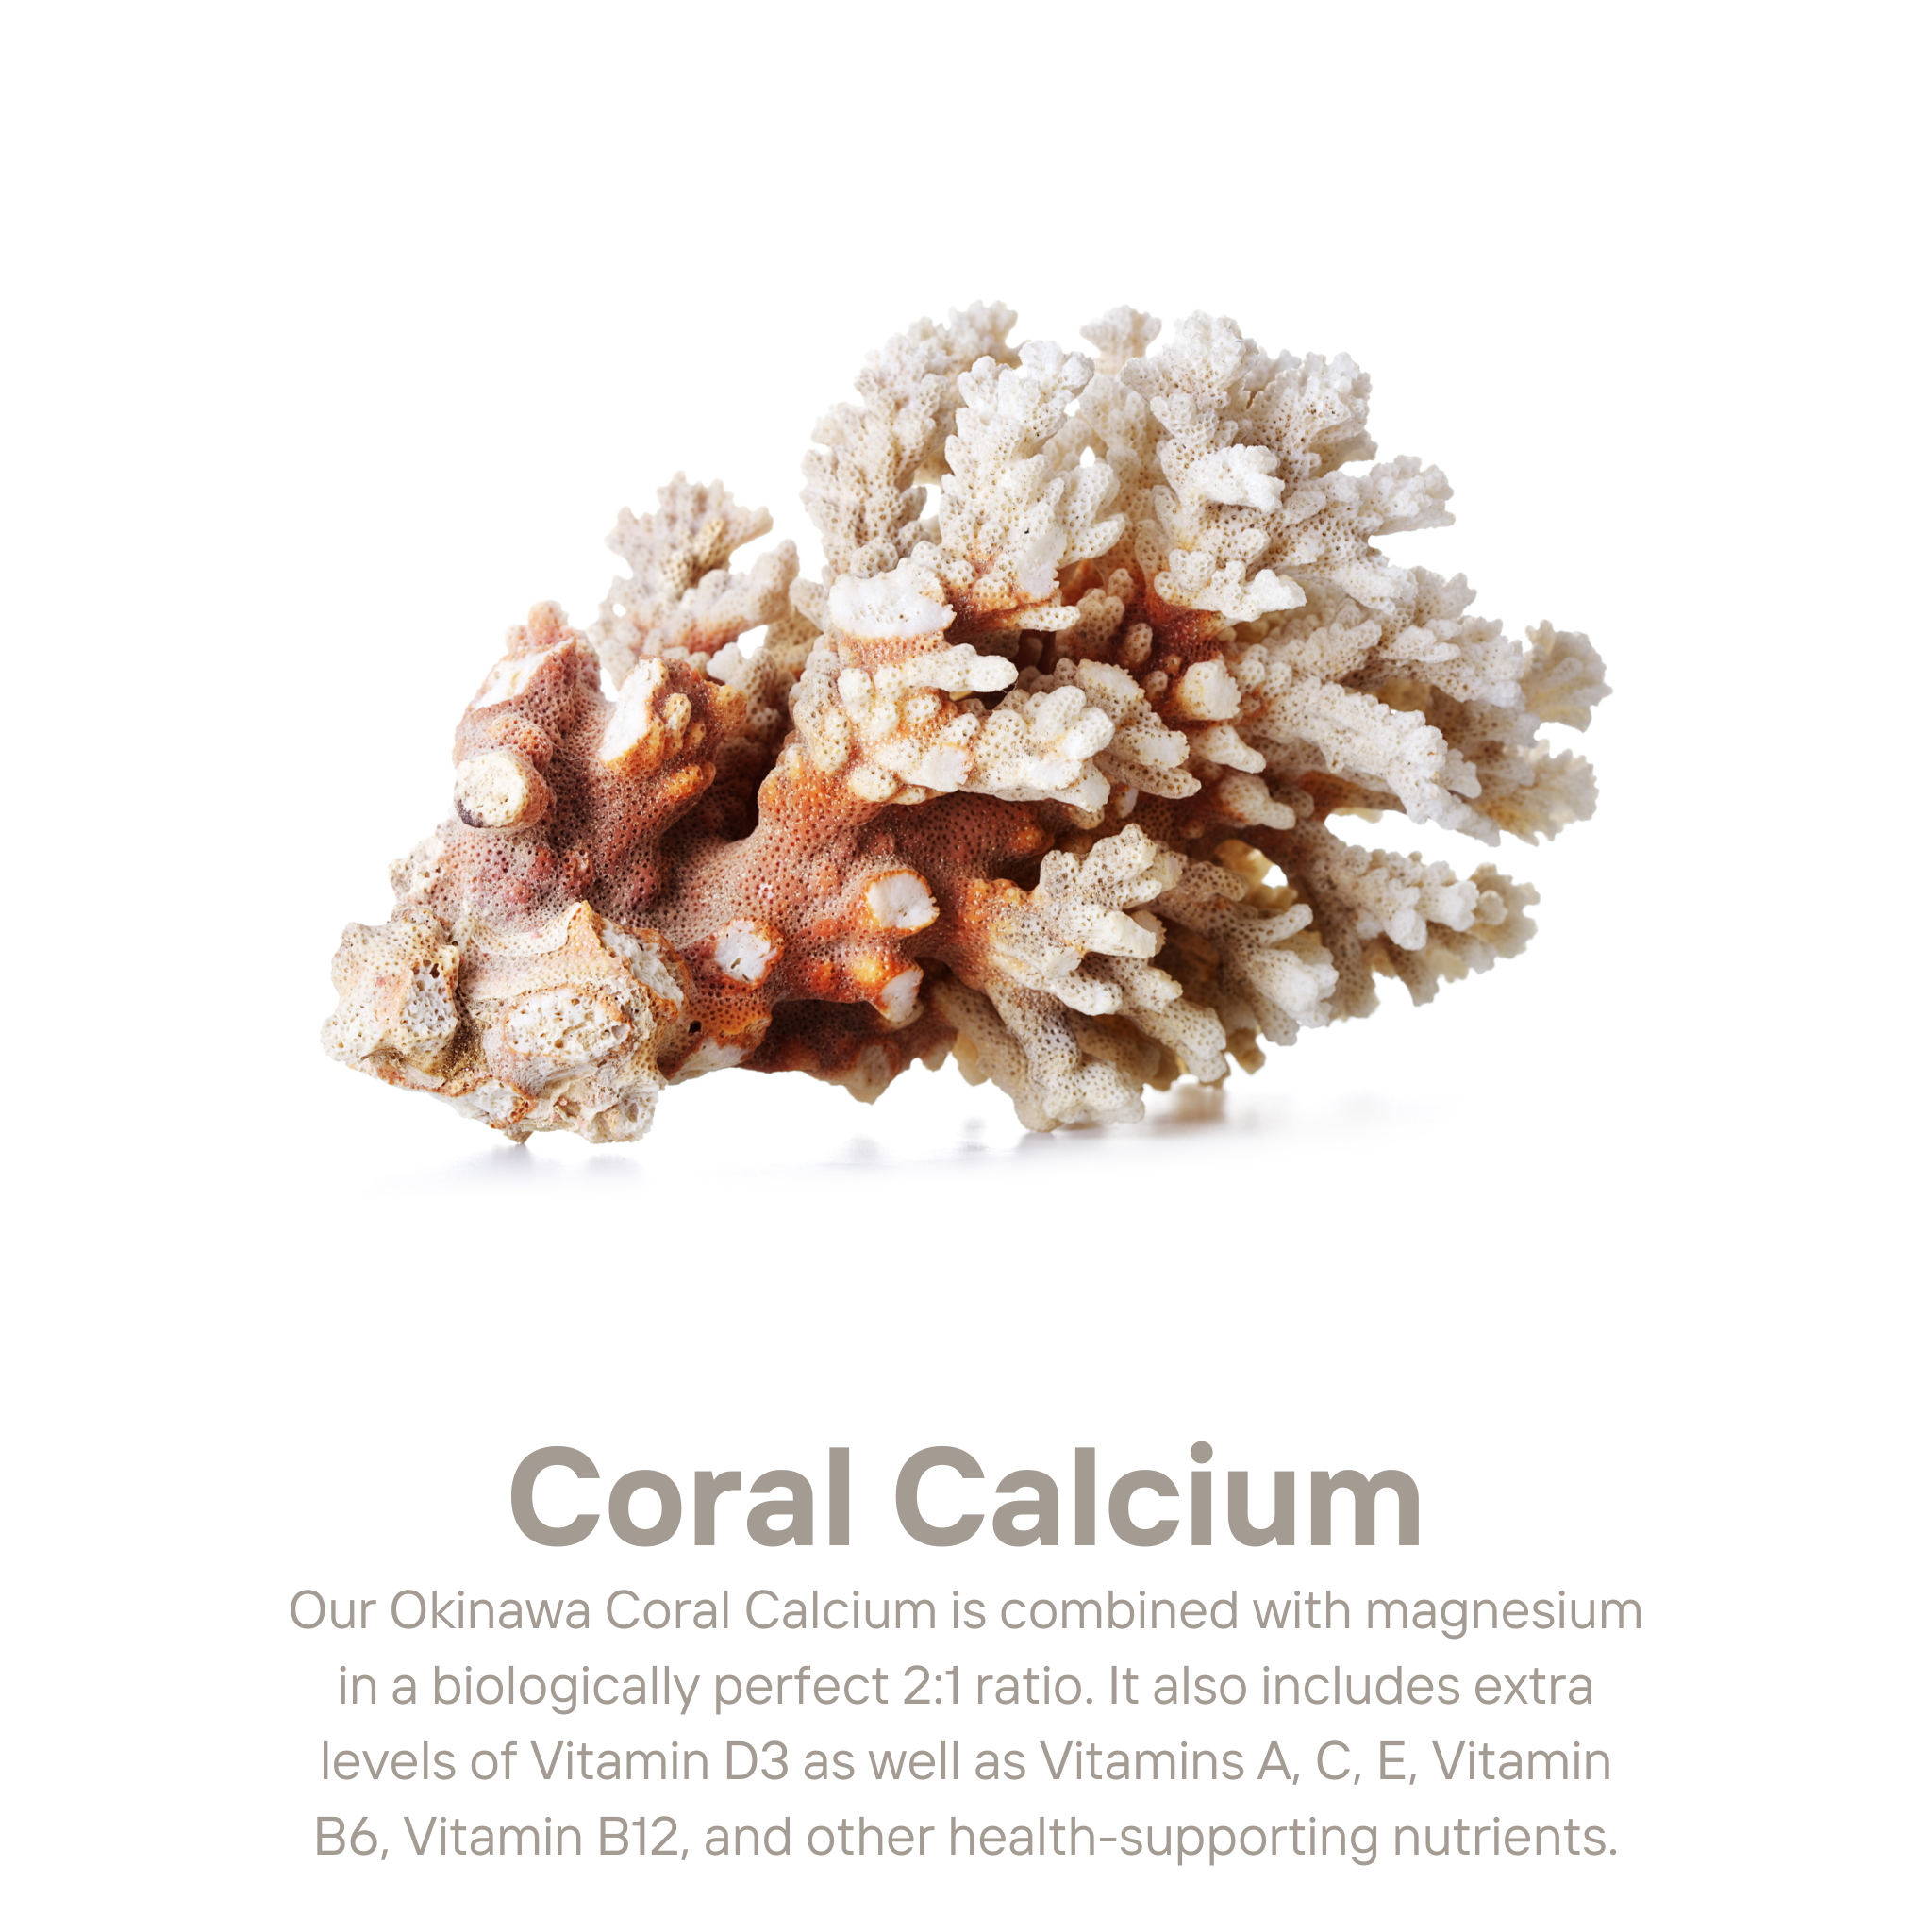 Okinawa Coral Calcium Supplements (60 count) - Immune & Supporting Bone Health with Magnesium, Zinc, Potassium, Vitamins & Minerals